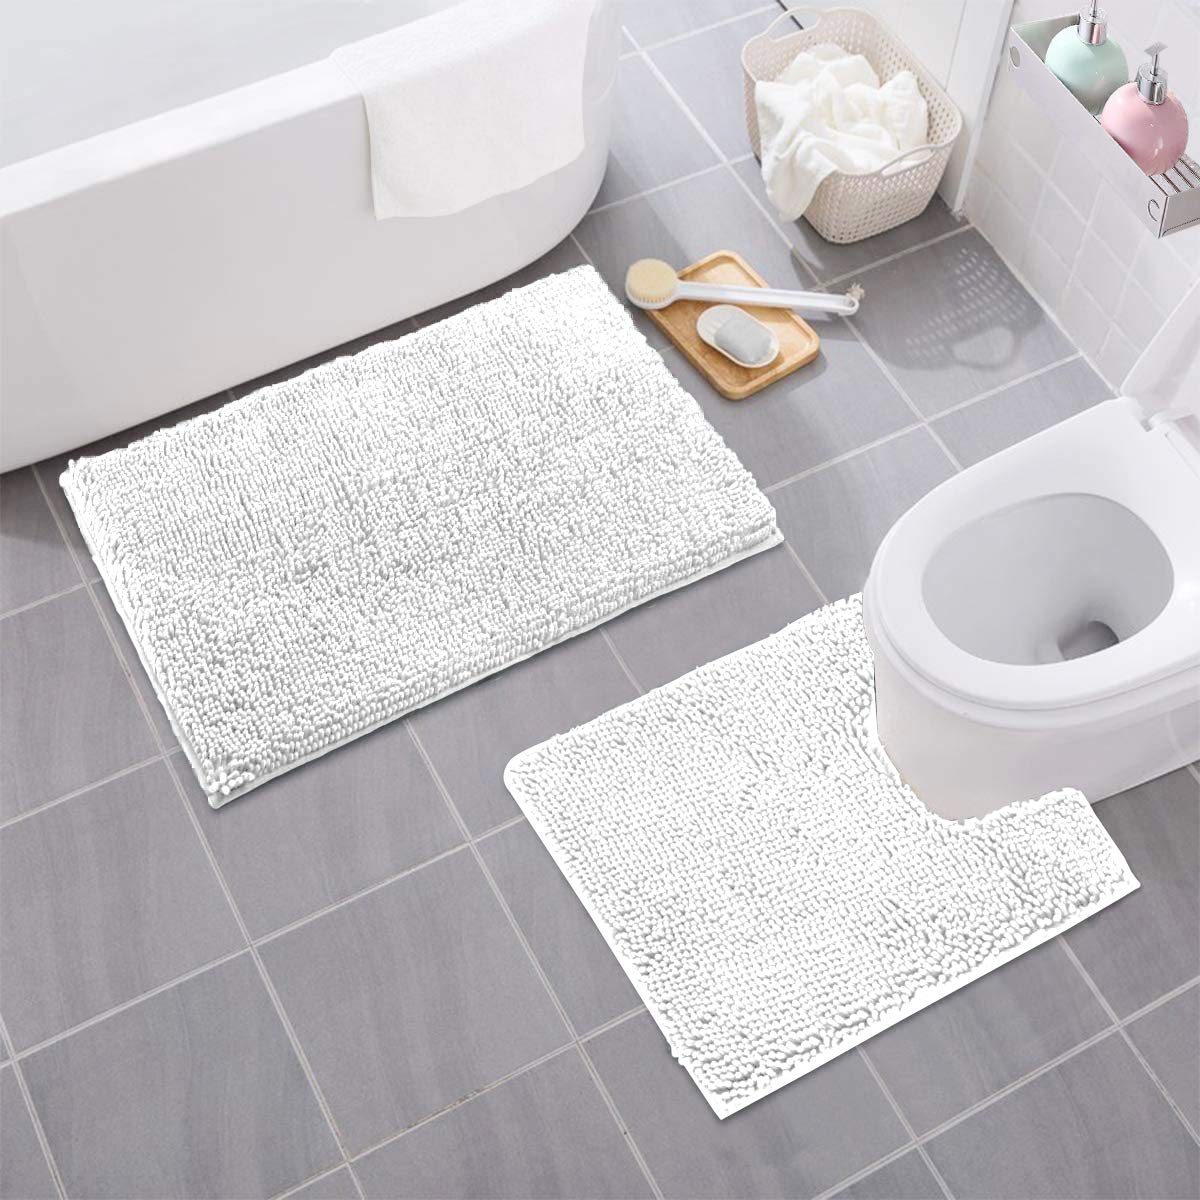 White Bathroom Rugs Sets 2 Piece, Luxury Chenille Bath Mat Set, Soft Plush Anti-Slip Bath Rug + U-Shaped Toilet Mat. Super Absorbent. (31''x 20'' Plus 20'' x 20'' U, White)  - Very Good